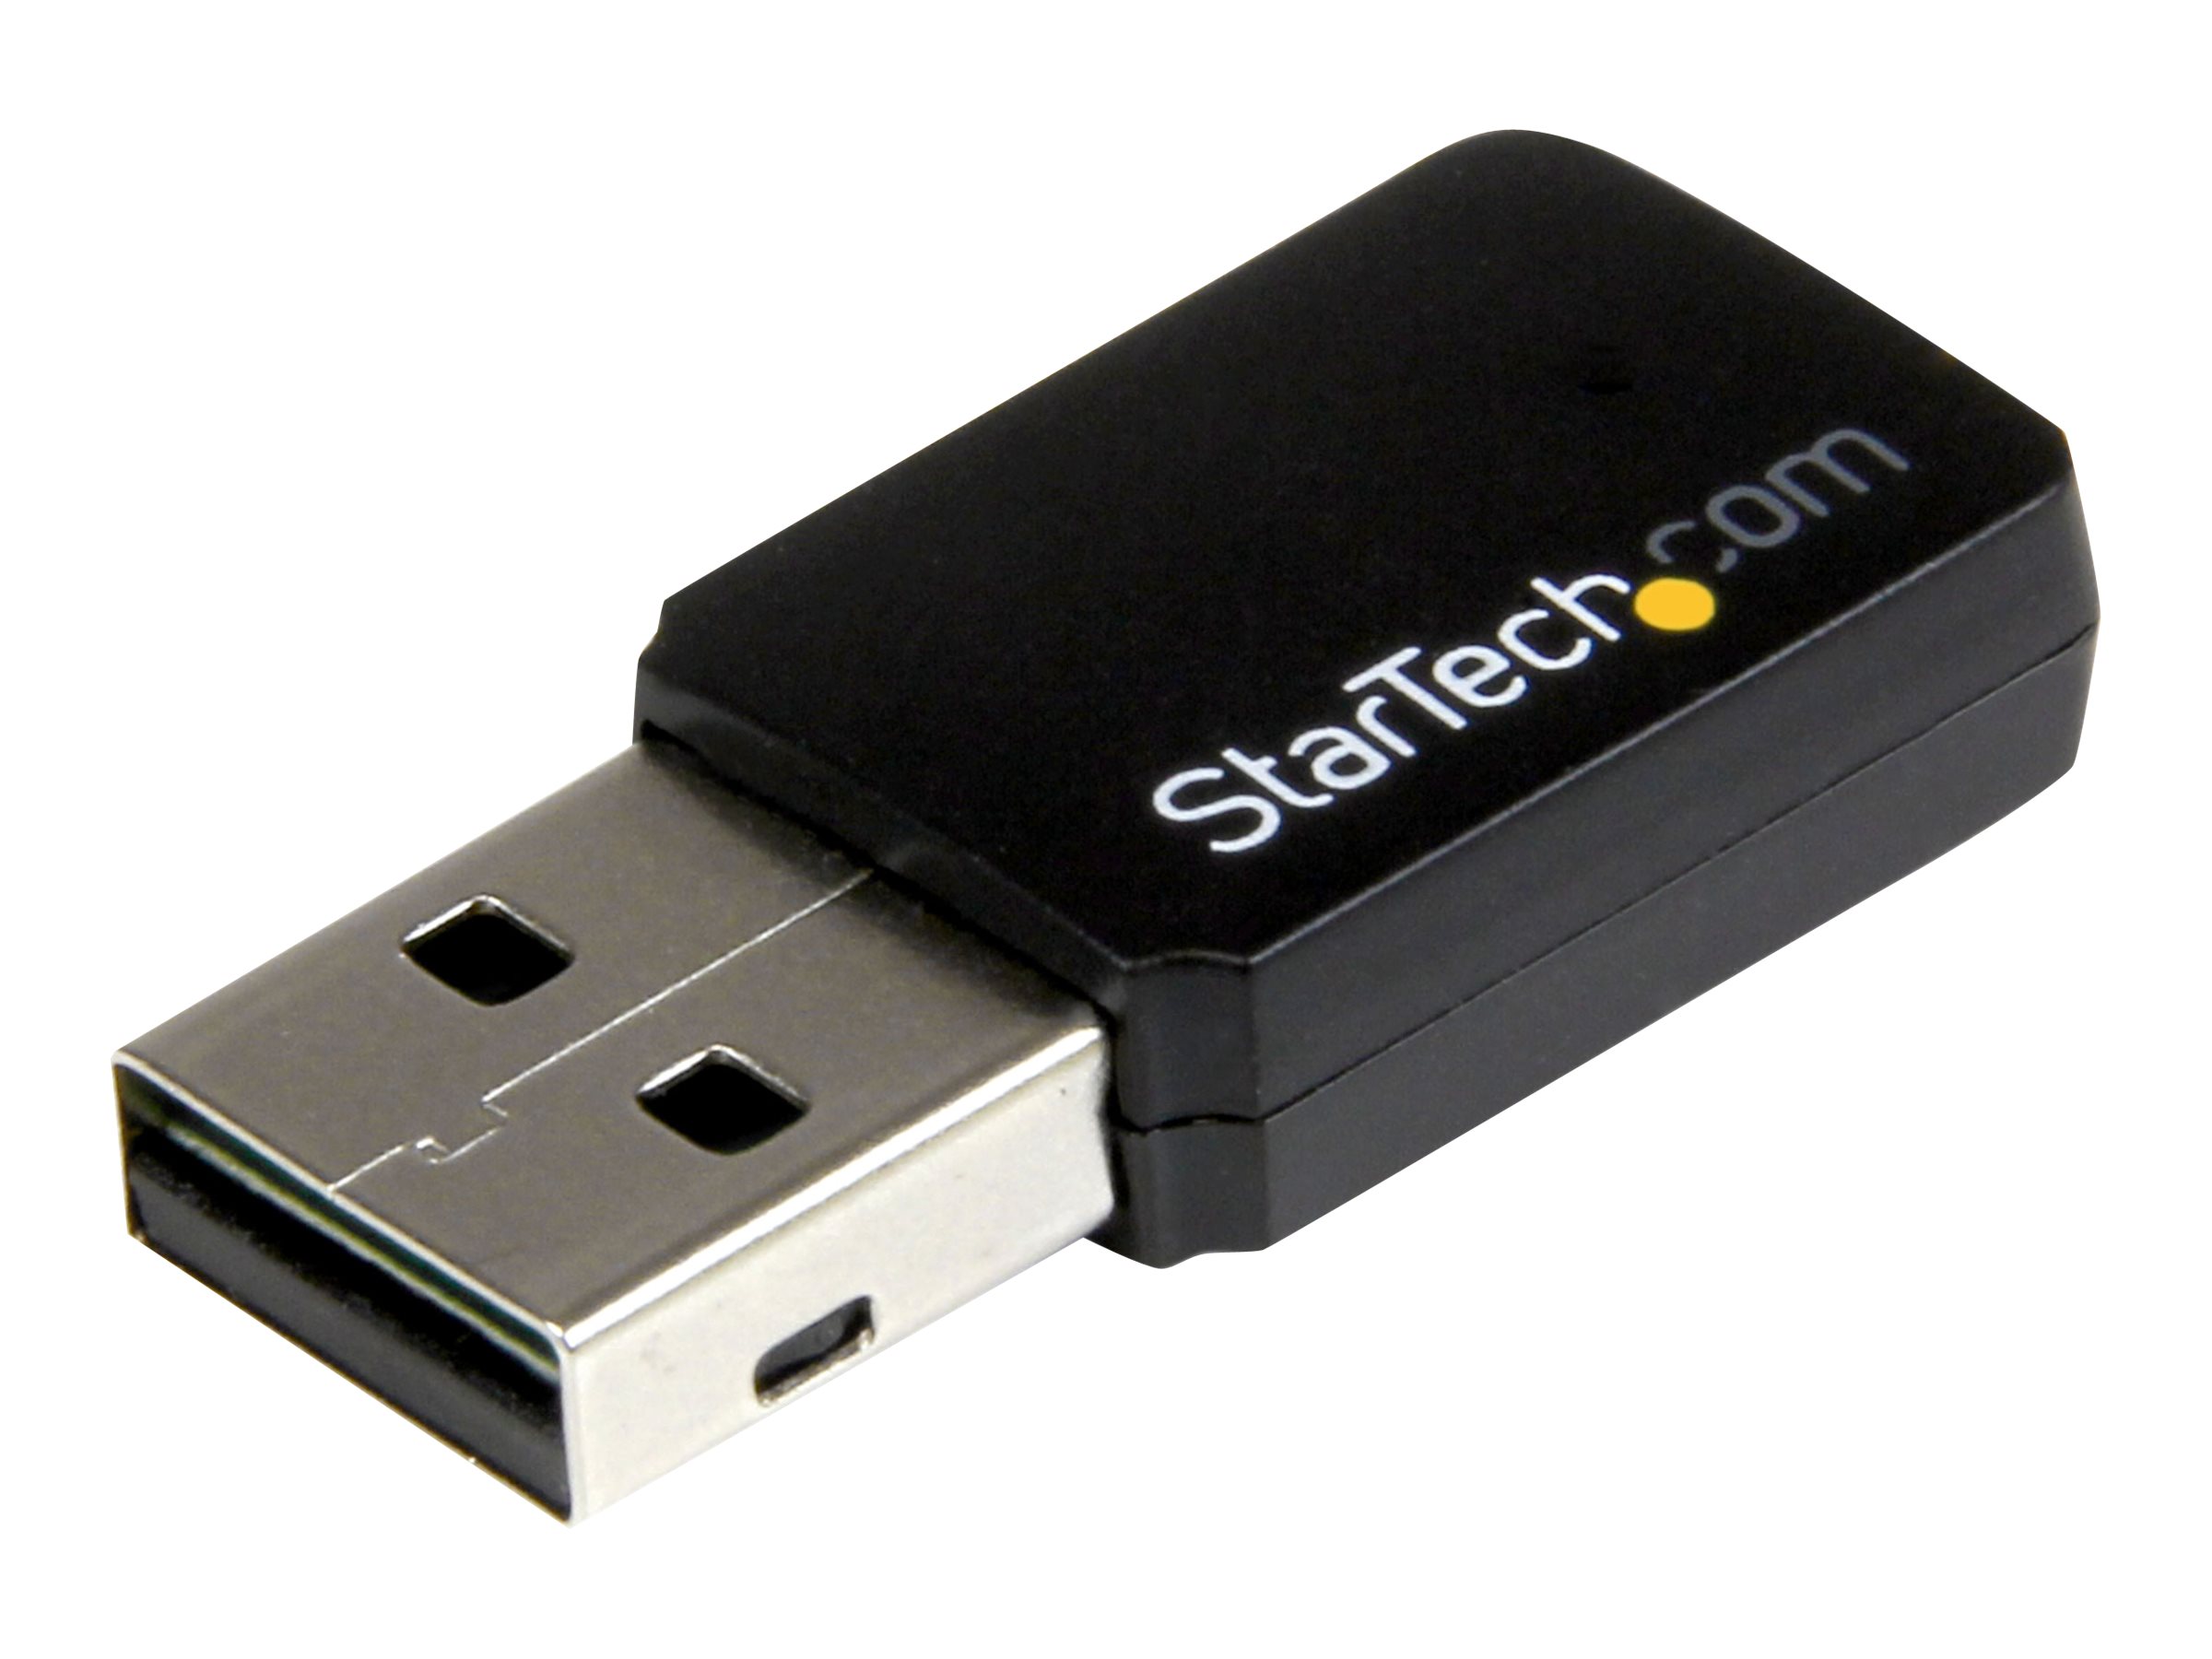 StarTech.com USB 2.0 AC600 Mini Dual Band Wireless-AC Network Adapter - 1T1R 802.11ac WiFi Adapter - 2.4GHz / 5GHz USB Wireless (USB433WACDB) - Netzwerkadapter - USB 2.0 - Wi-Fi 5